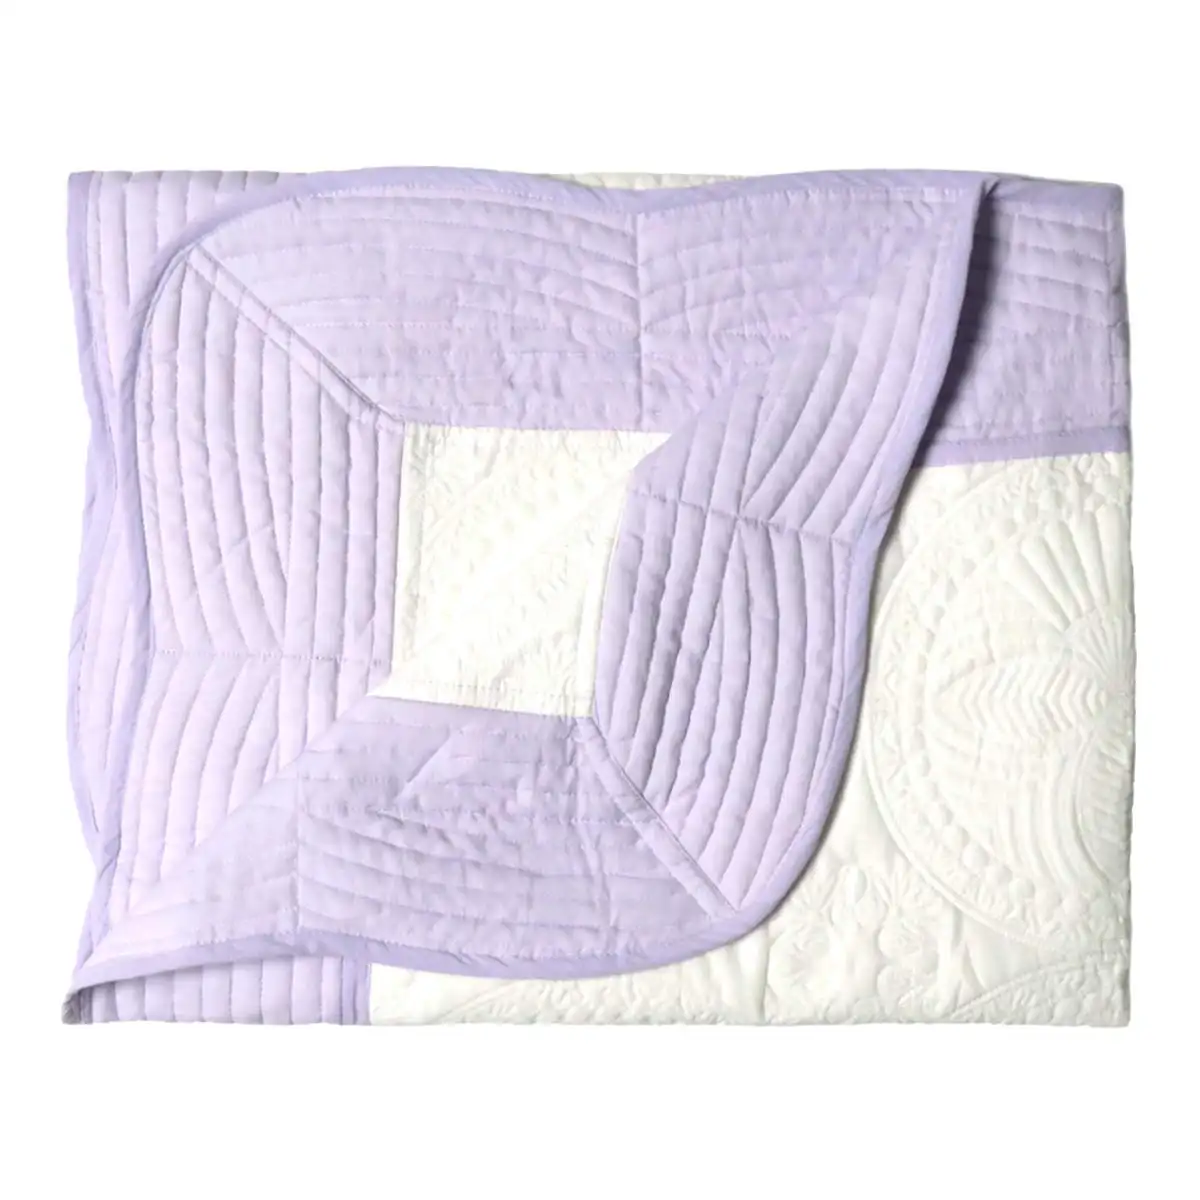 Edredón acolchado festoneado en relieve de algodón ligero personalizado, manta para bebés, edredón para dormir para bebés recién nacidos